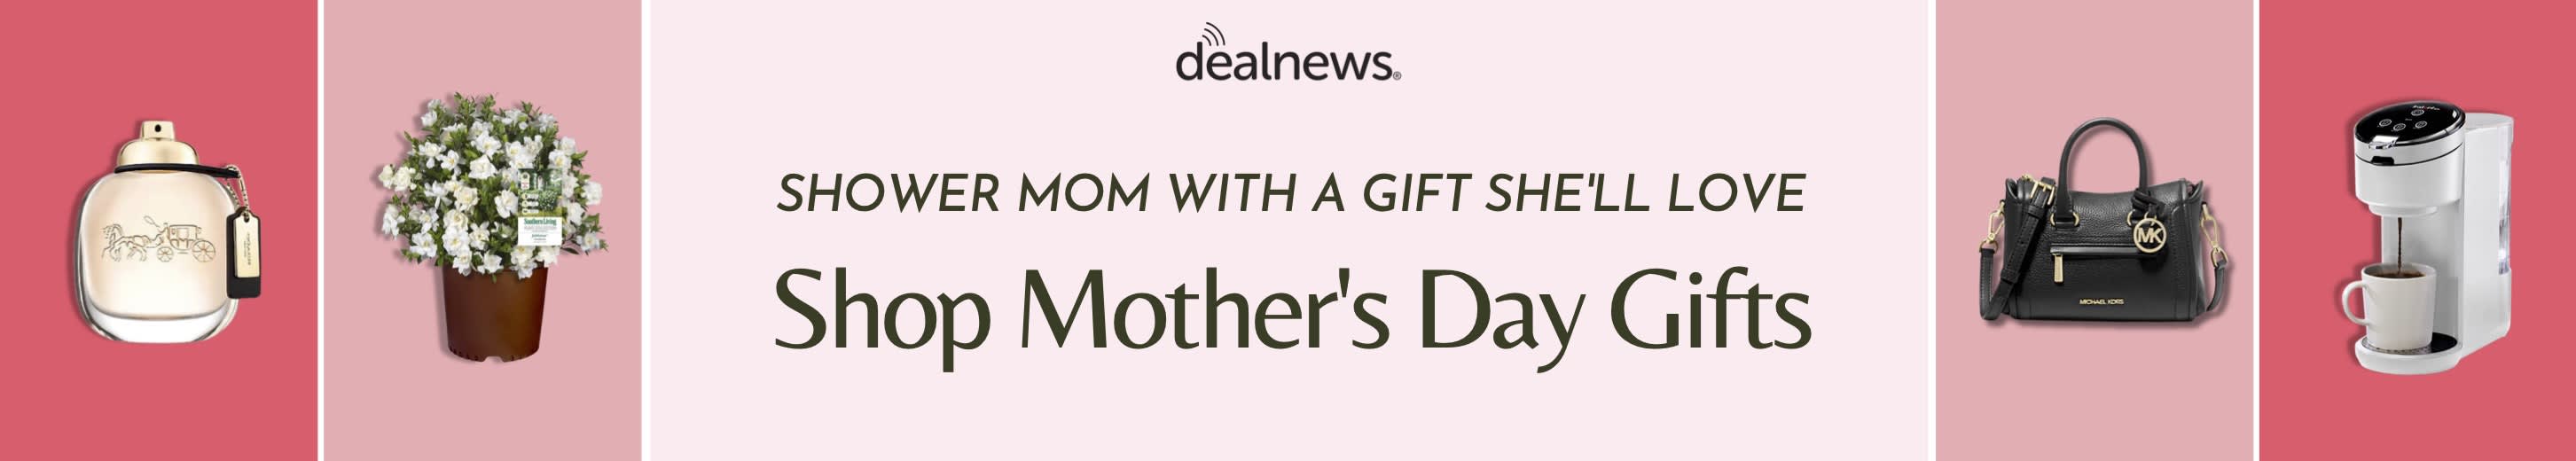 Shop Mother's Day Deals!